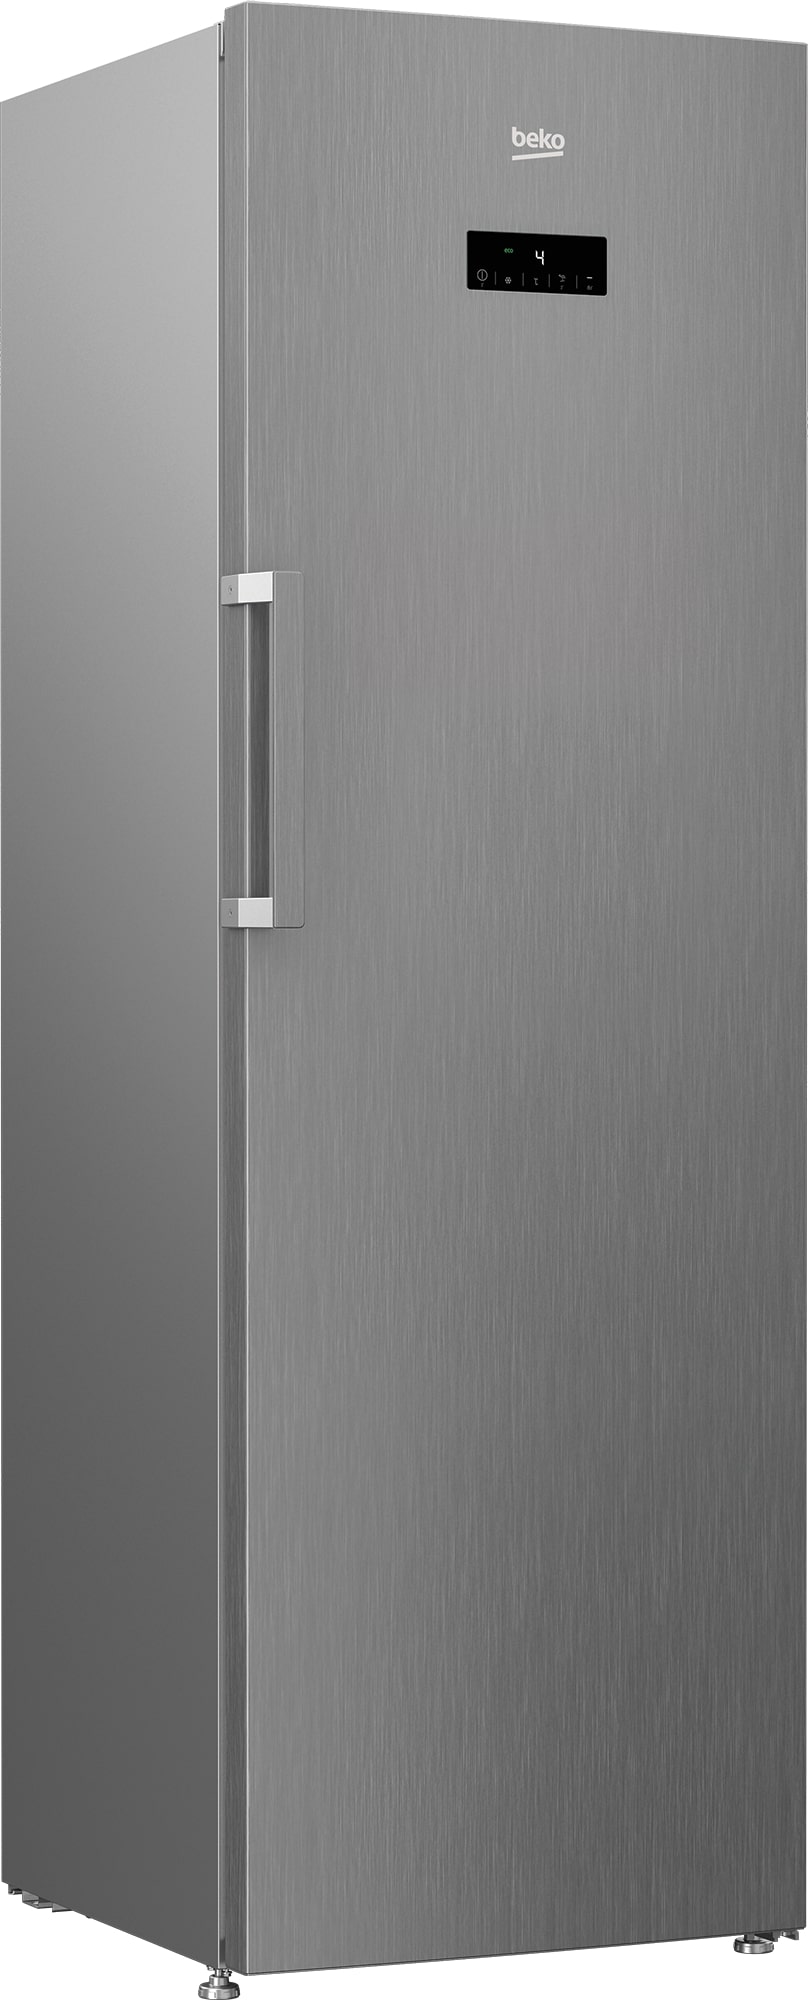 Beko Refrigerator 375L Steel